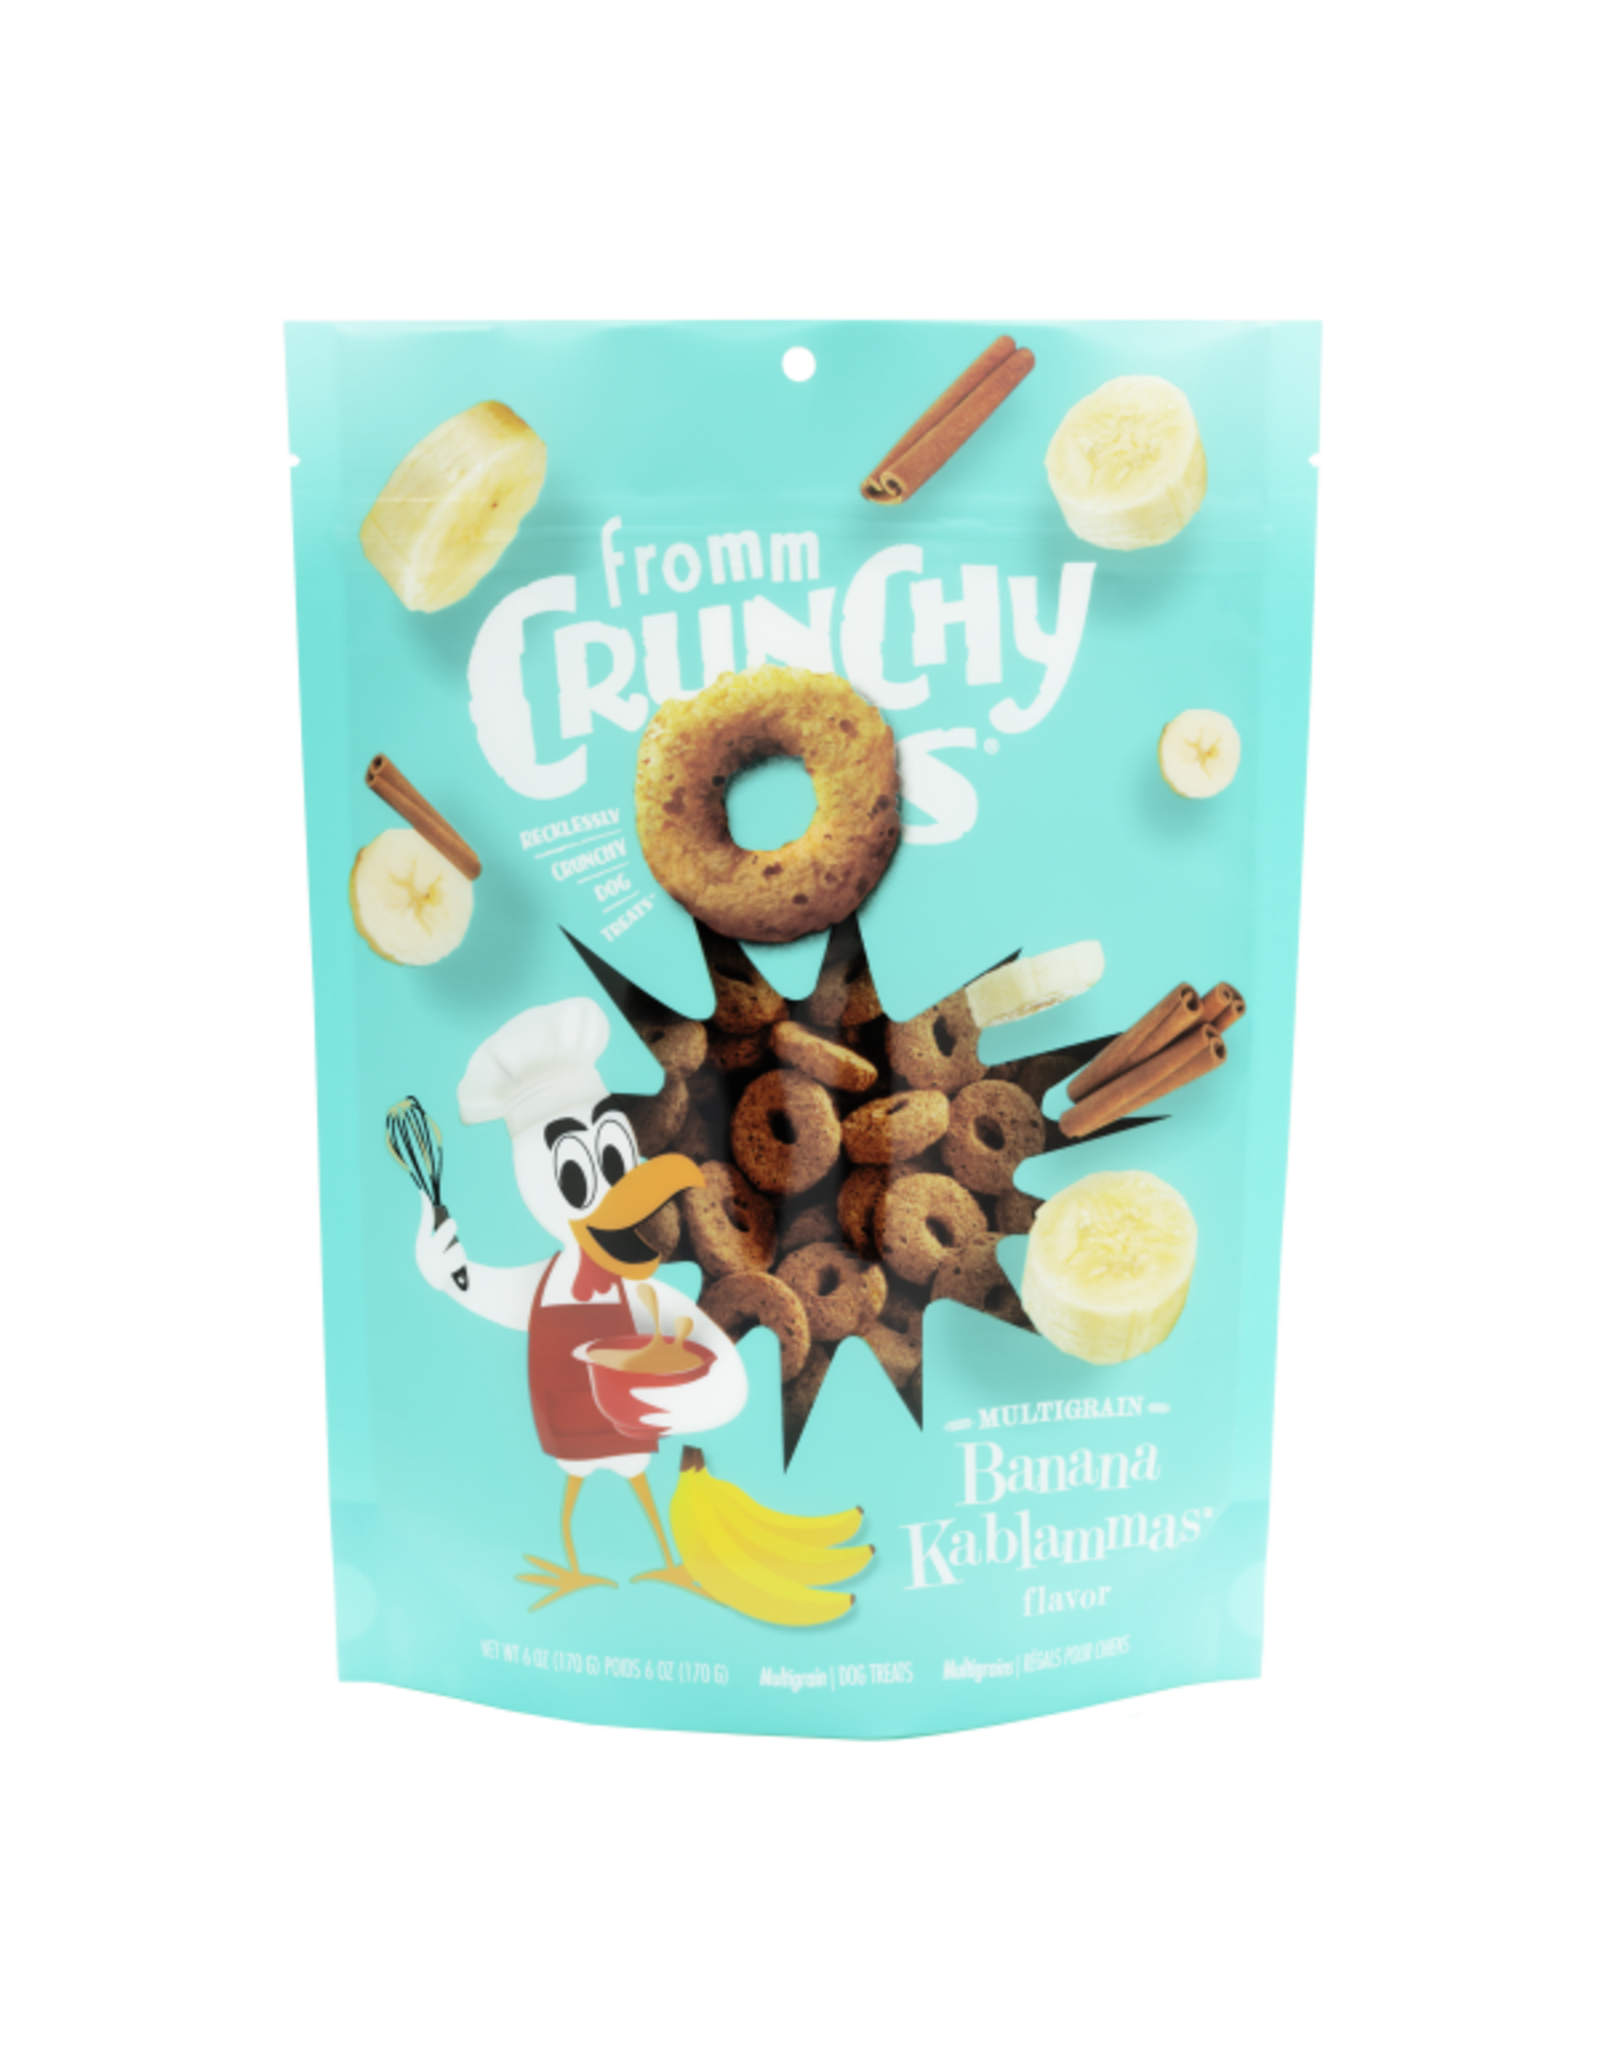 Fromm Crunchy Os GF Banana Kablammas Treats 6 oz